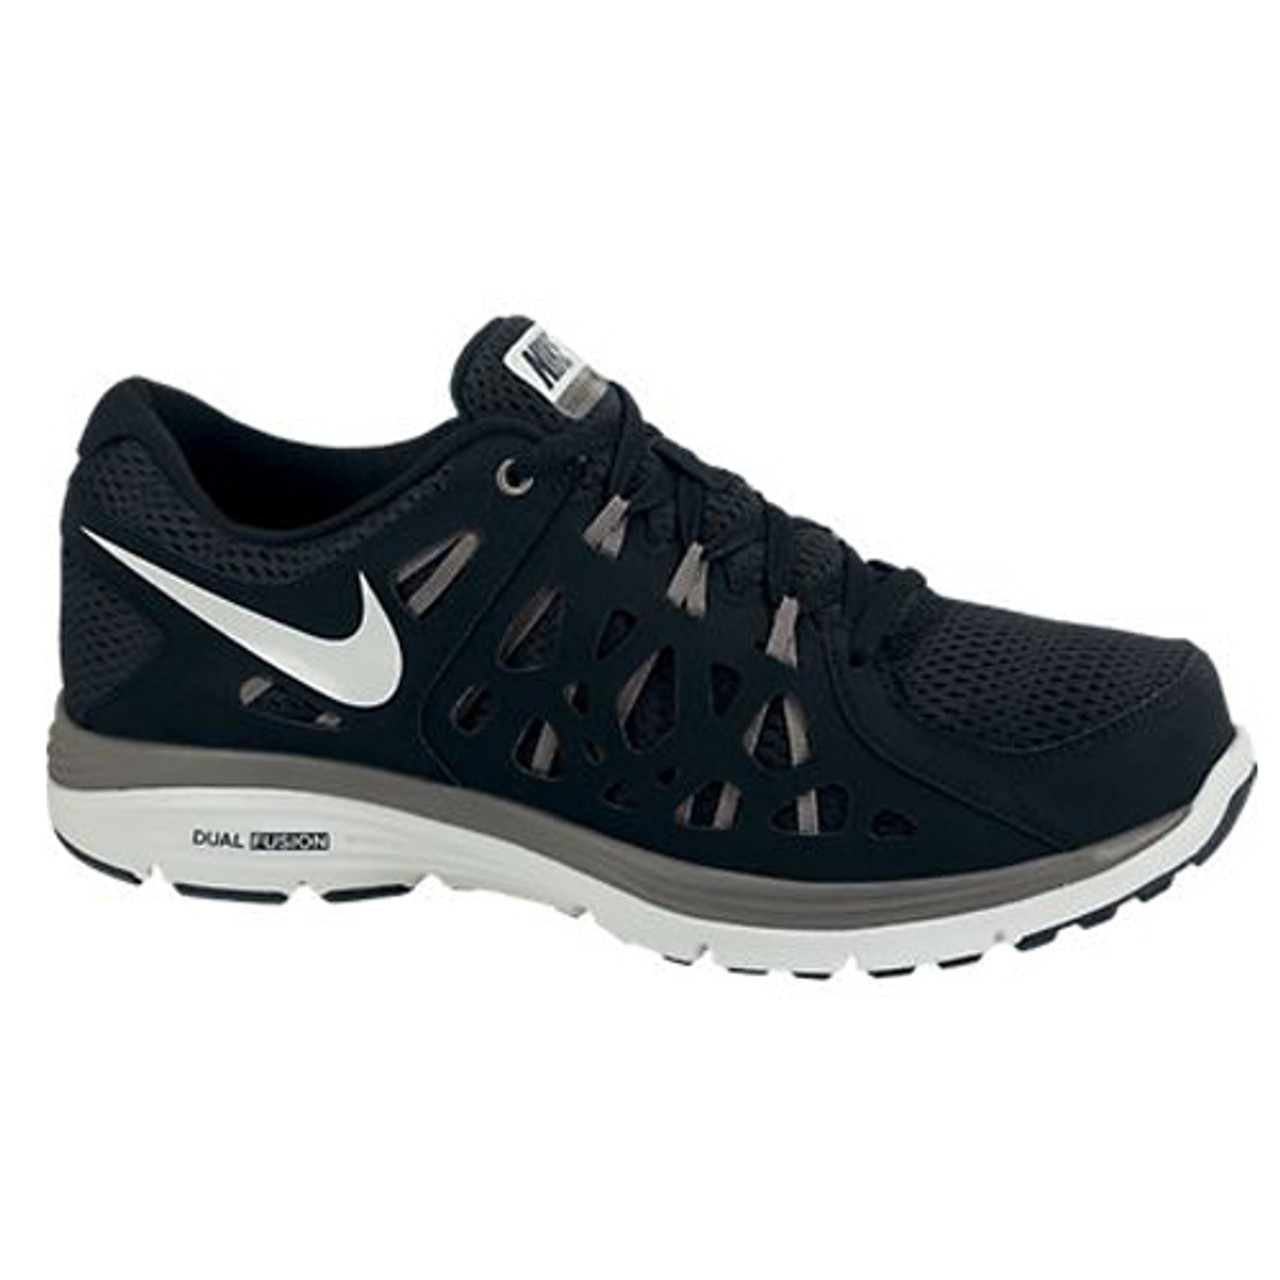 Dual Fusion Run 2 Black/White Mens Running Shoes - | Discount Nike Athletic & More - Shoolu.com | Shoolu.com